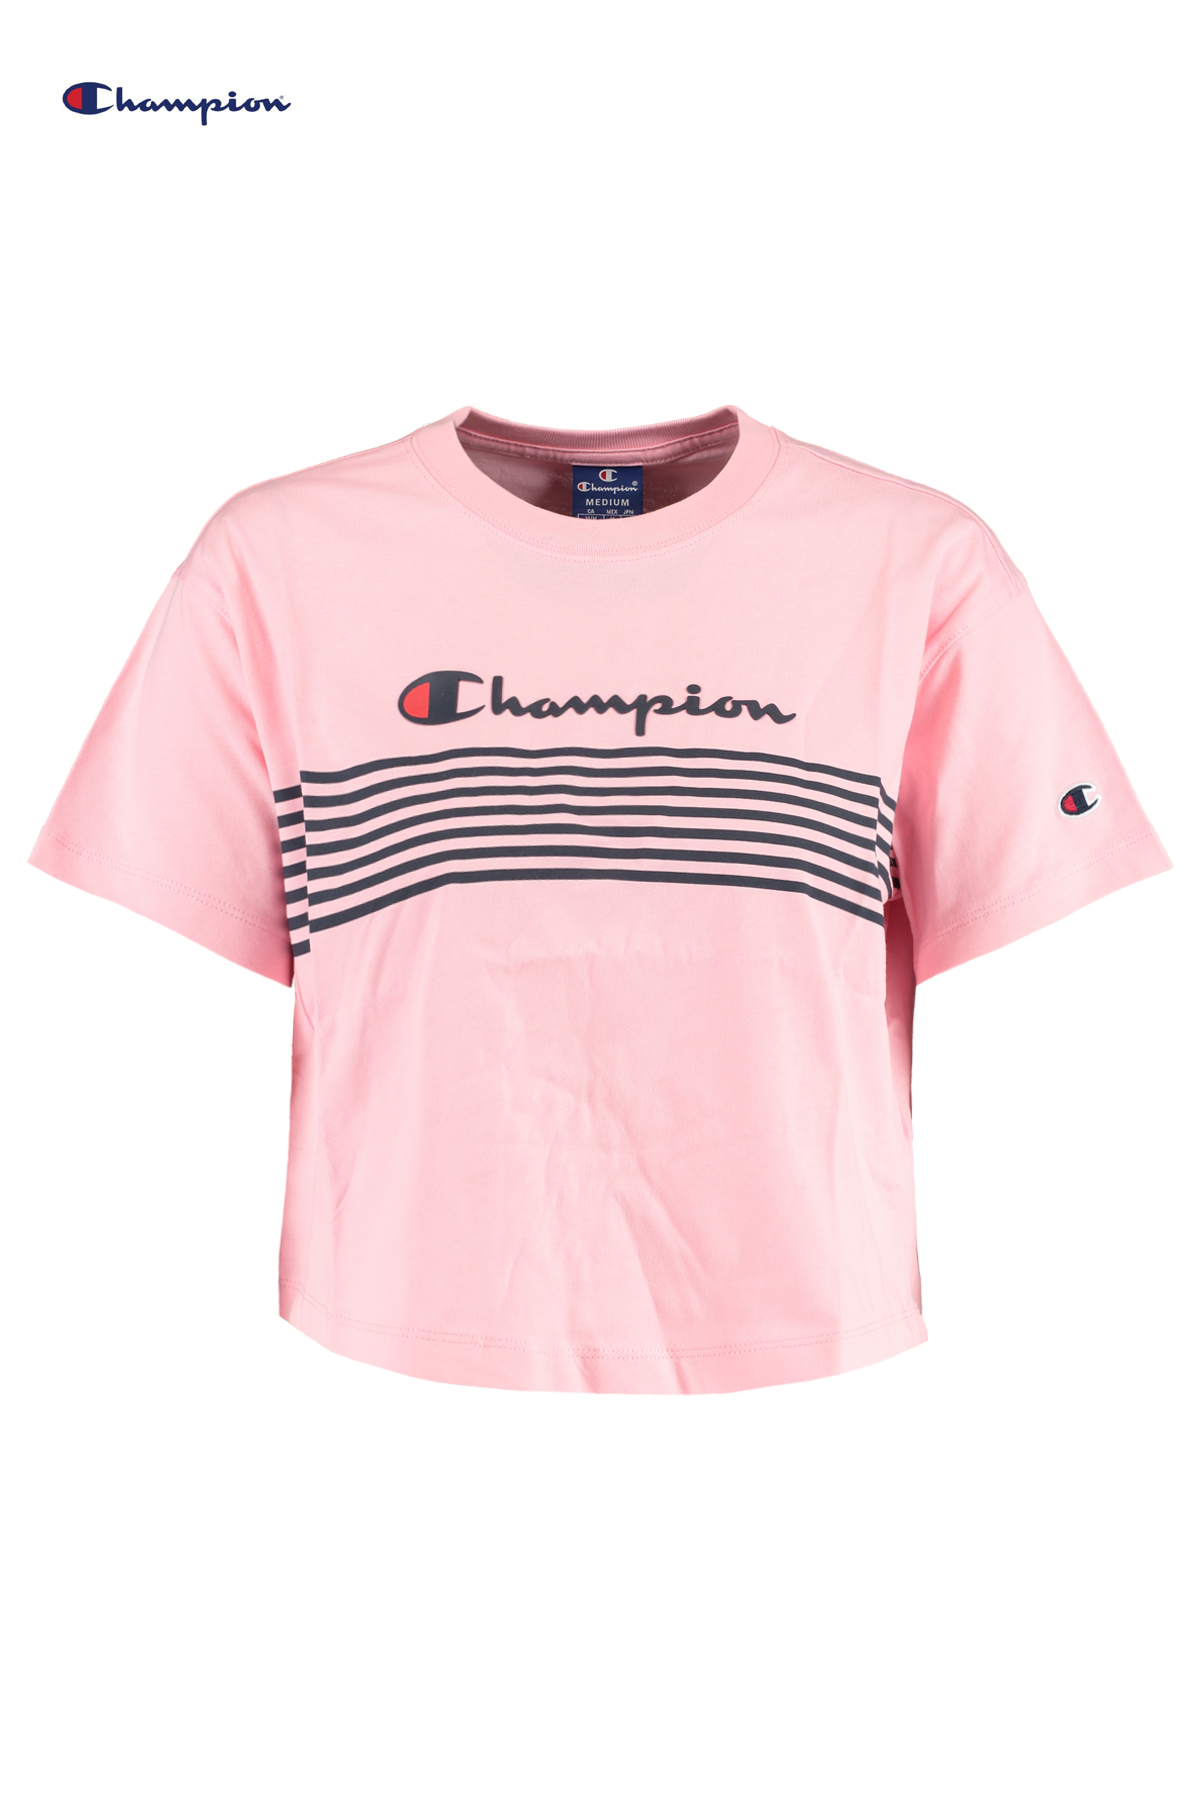 مجنون الجهاز اعمال champion t shirt dame pink - theembryonicartist.com